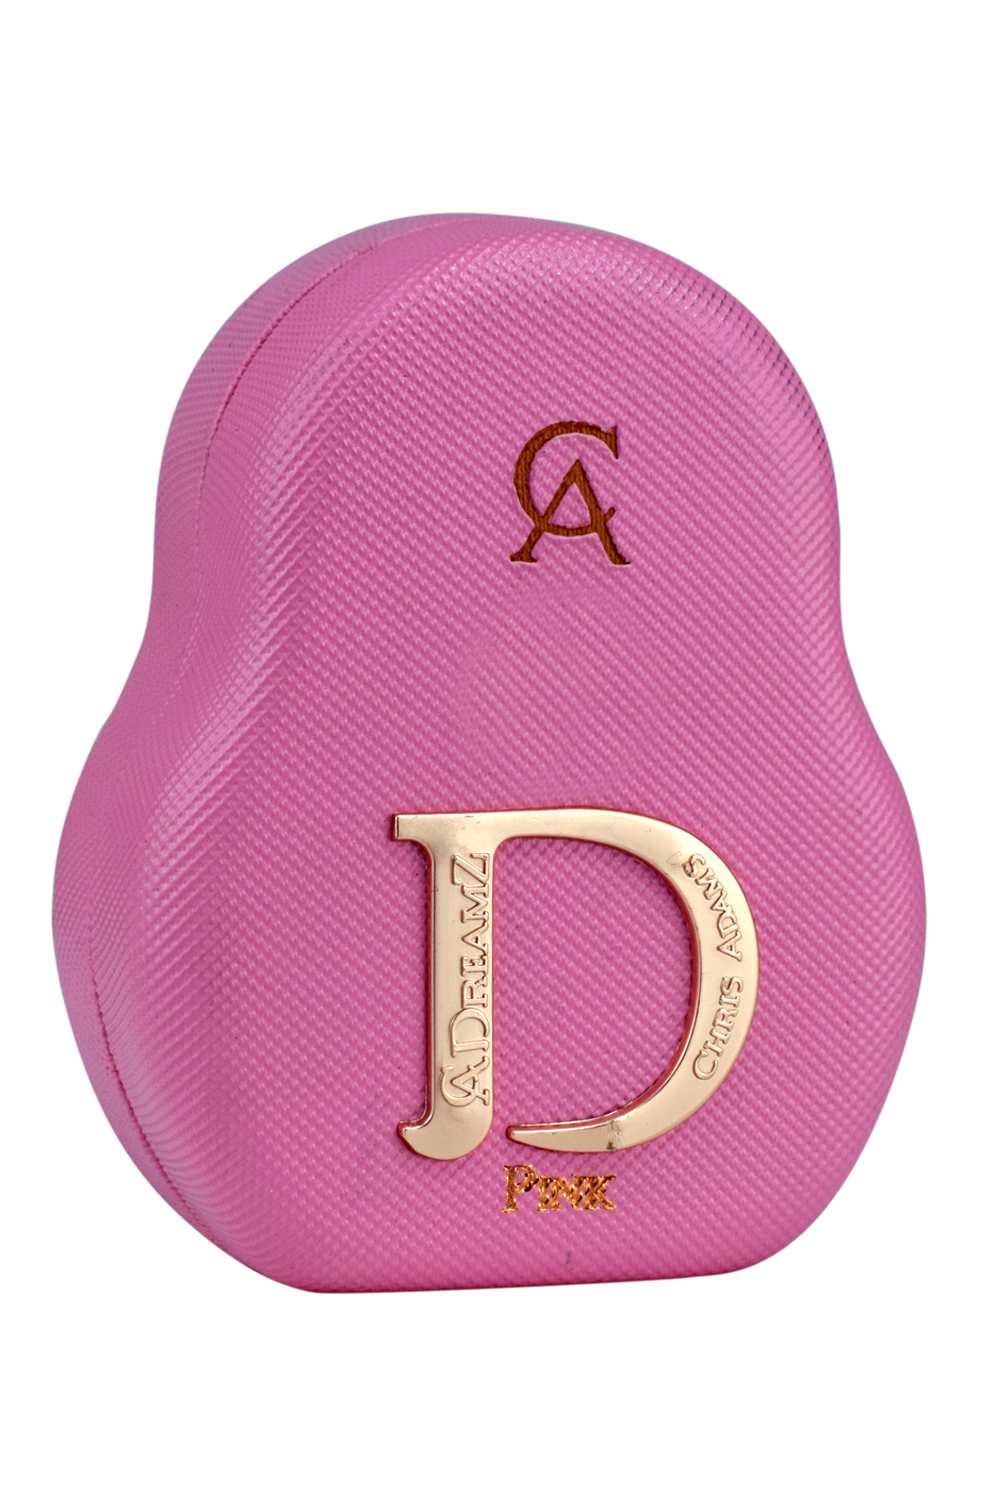 Chris Adams Dreamz Pink Eau de Parfum For Women, 100ml